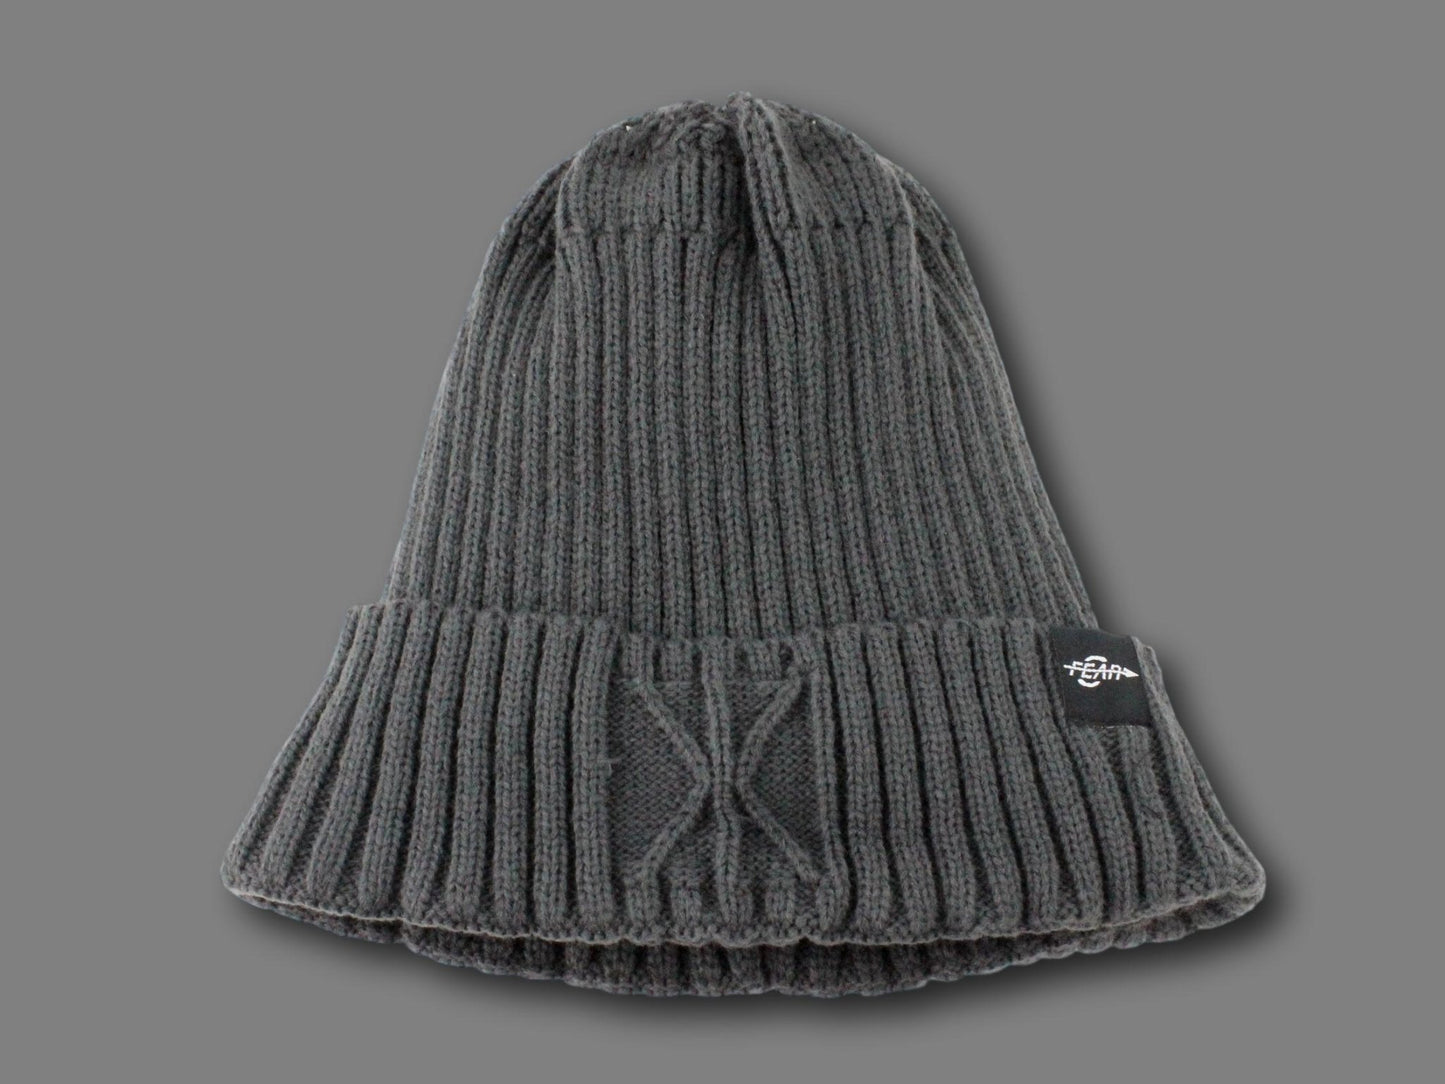 Fear0 NJ Extreme Warm Black Cuff Beanie Hat for Men or Women - Unisex - Accessories - Outerwear - Hats - Benn~Burry